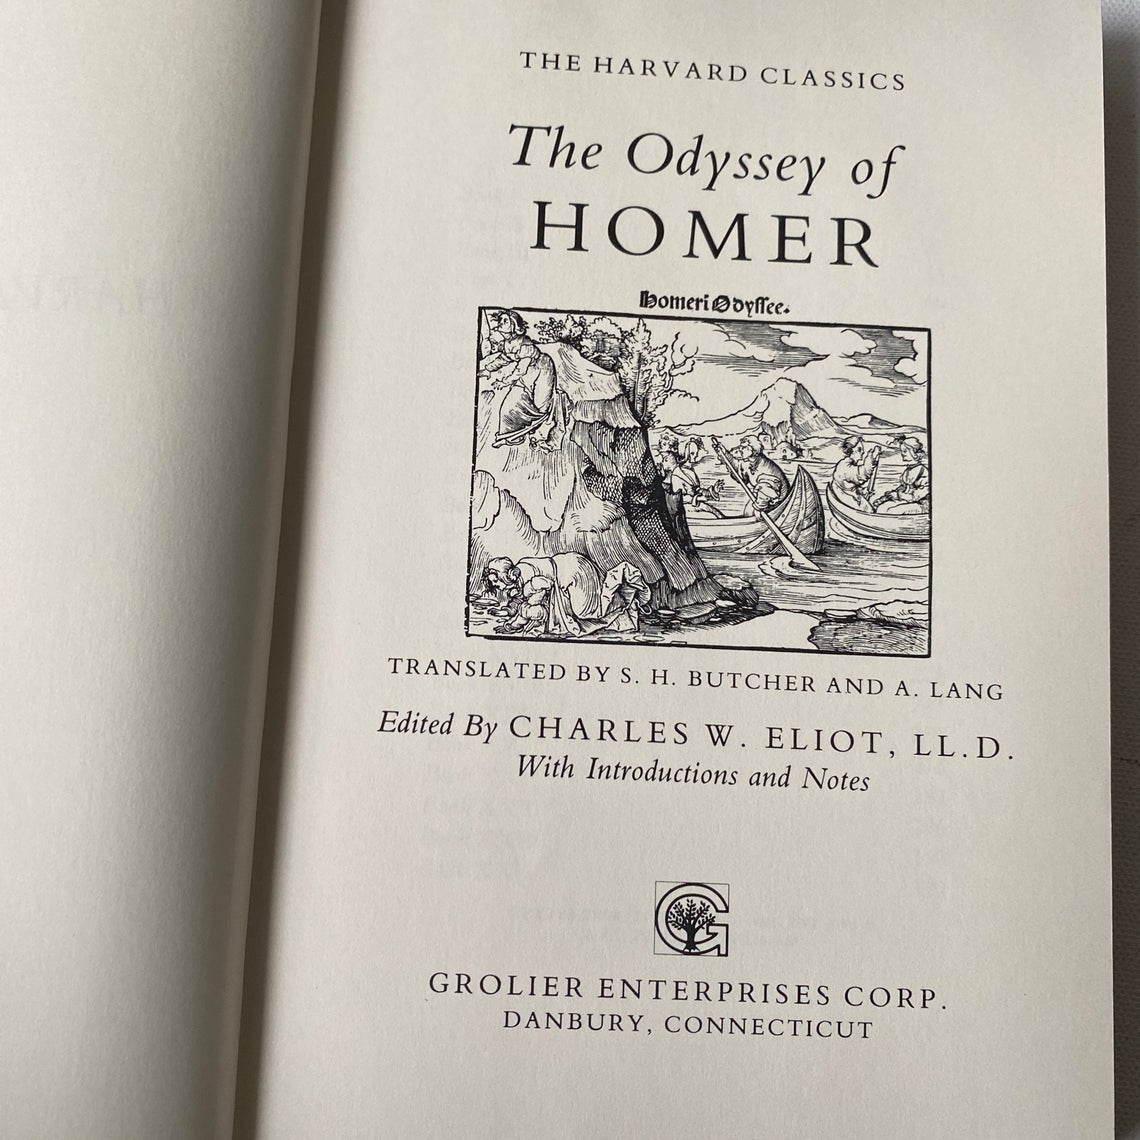 Vintage Harvard Classics Book Set,  Greek and Roman authors, including Plato, Epictetus, Marcus Aurelius, Homer, Plutarch